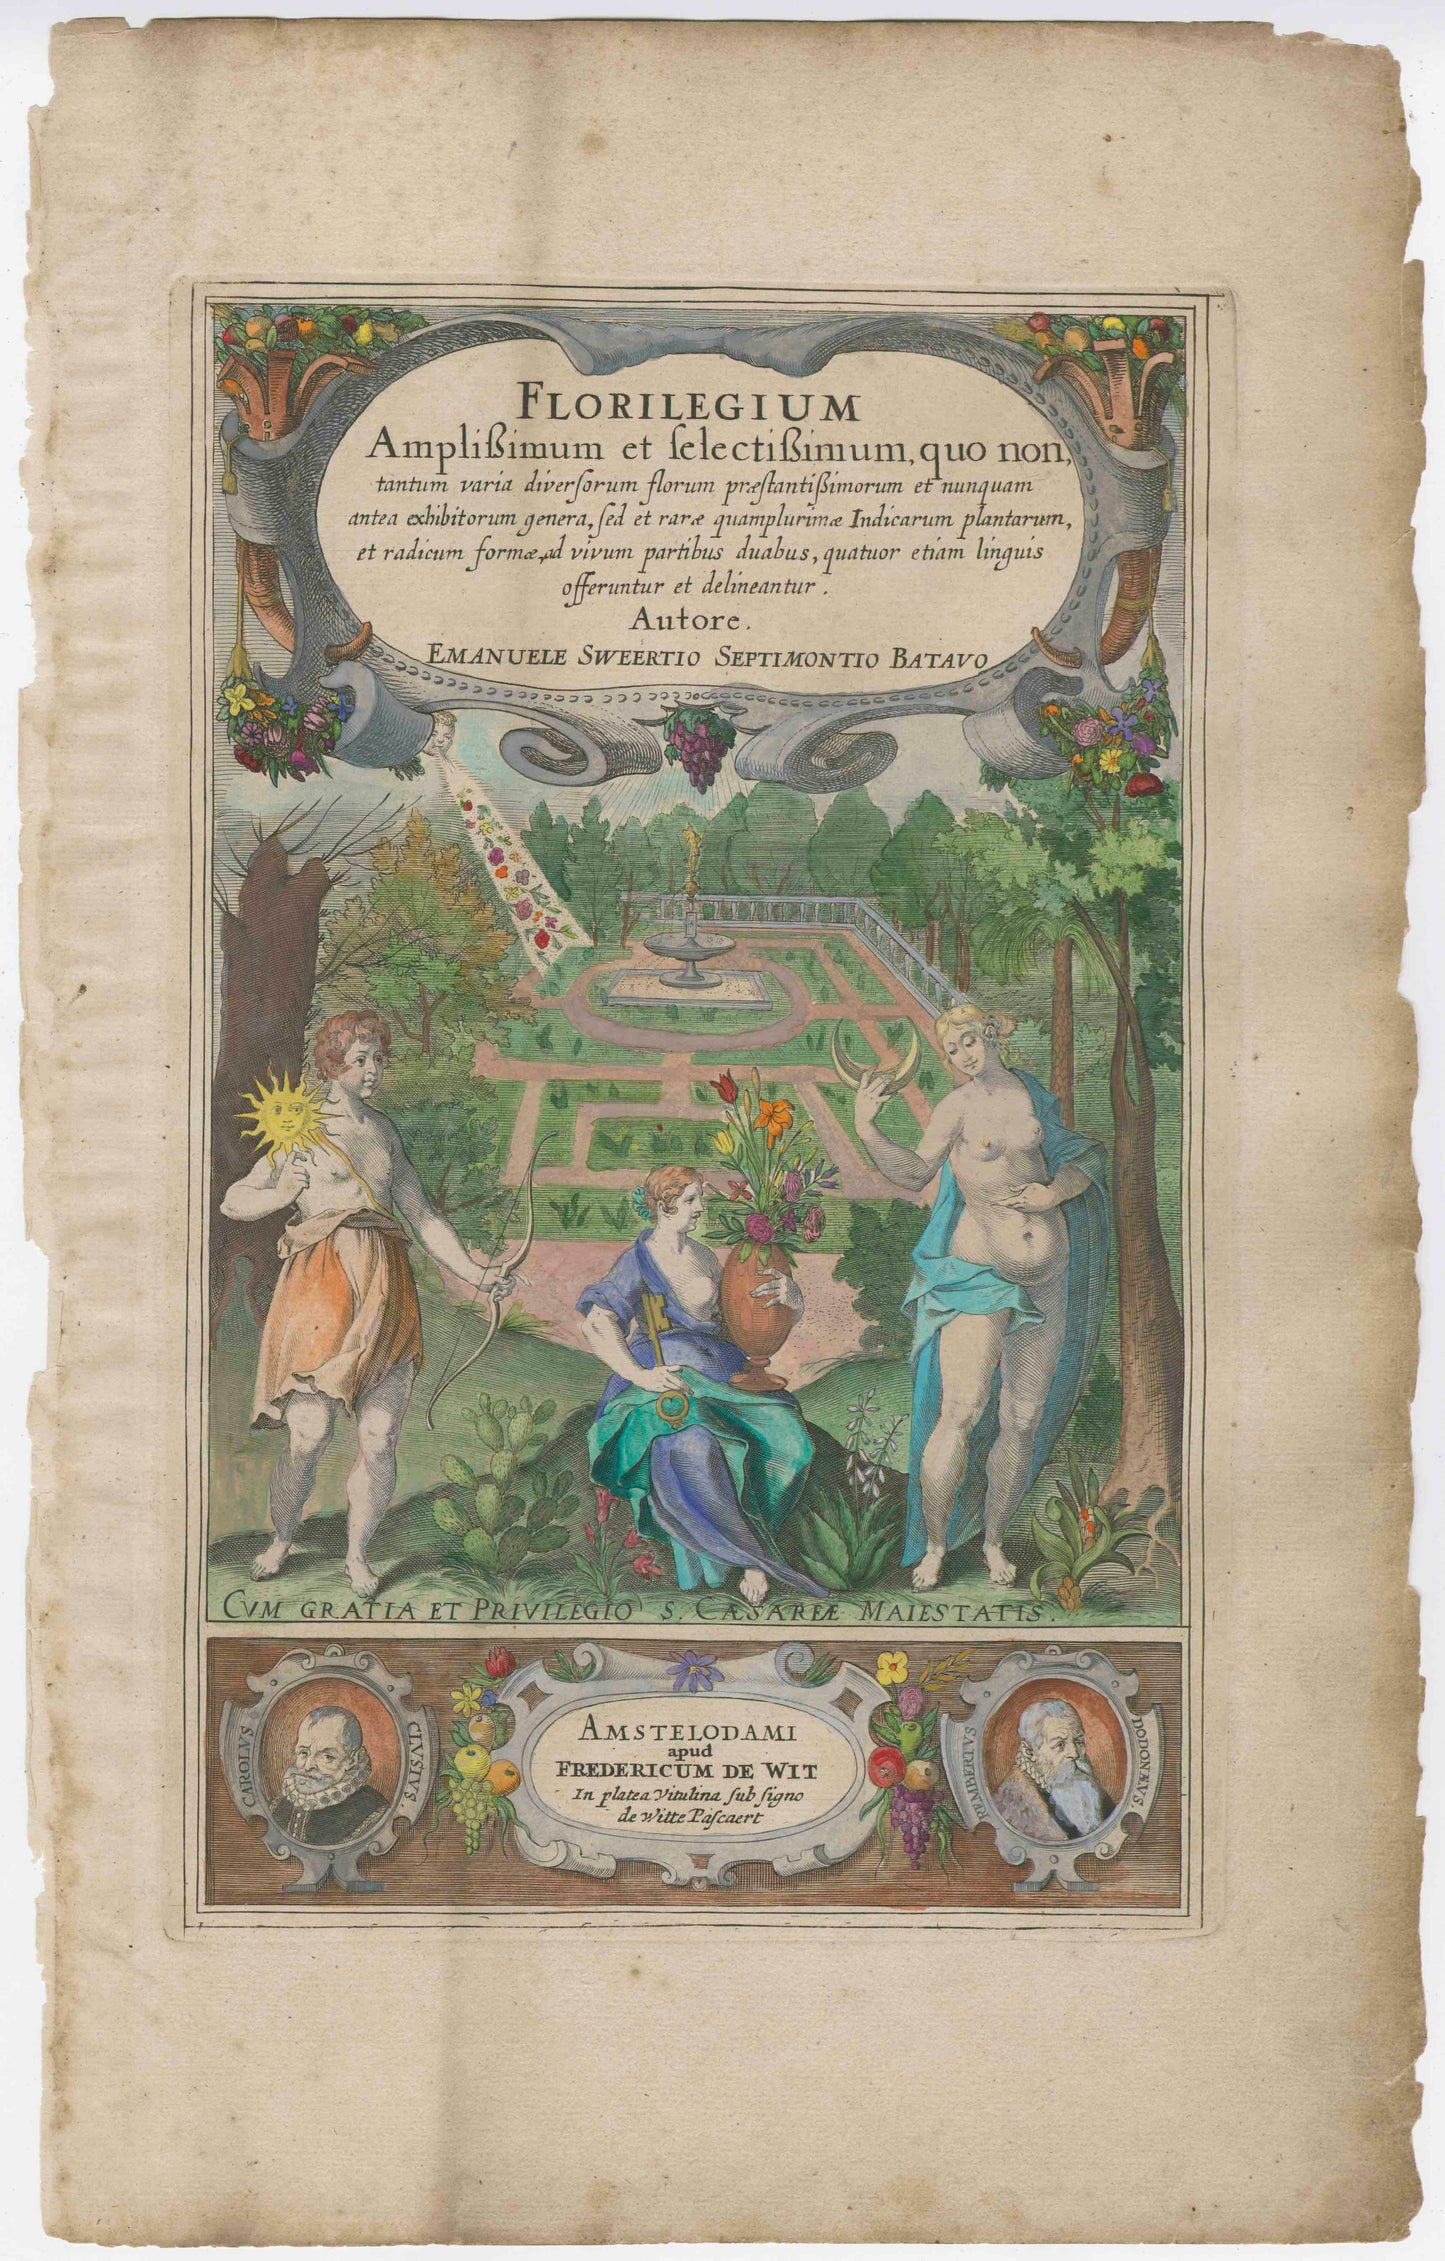 Emanuele Sweerts 17th Century "Florilegium" Print - Plate 22